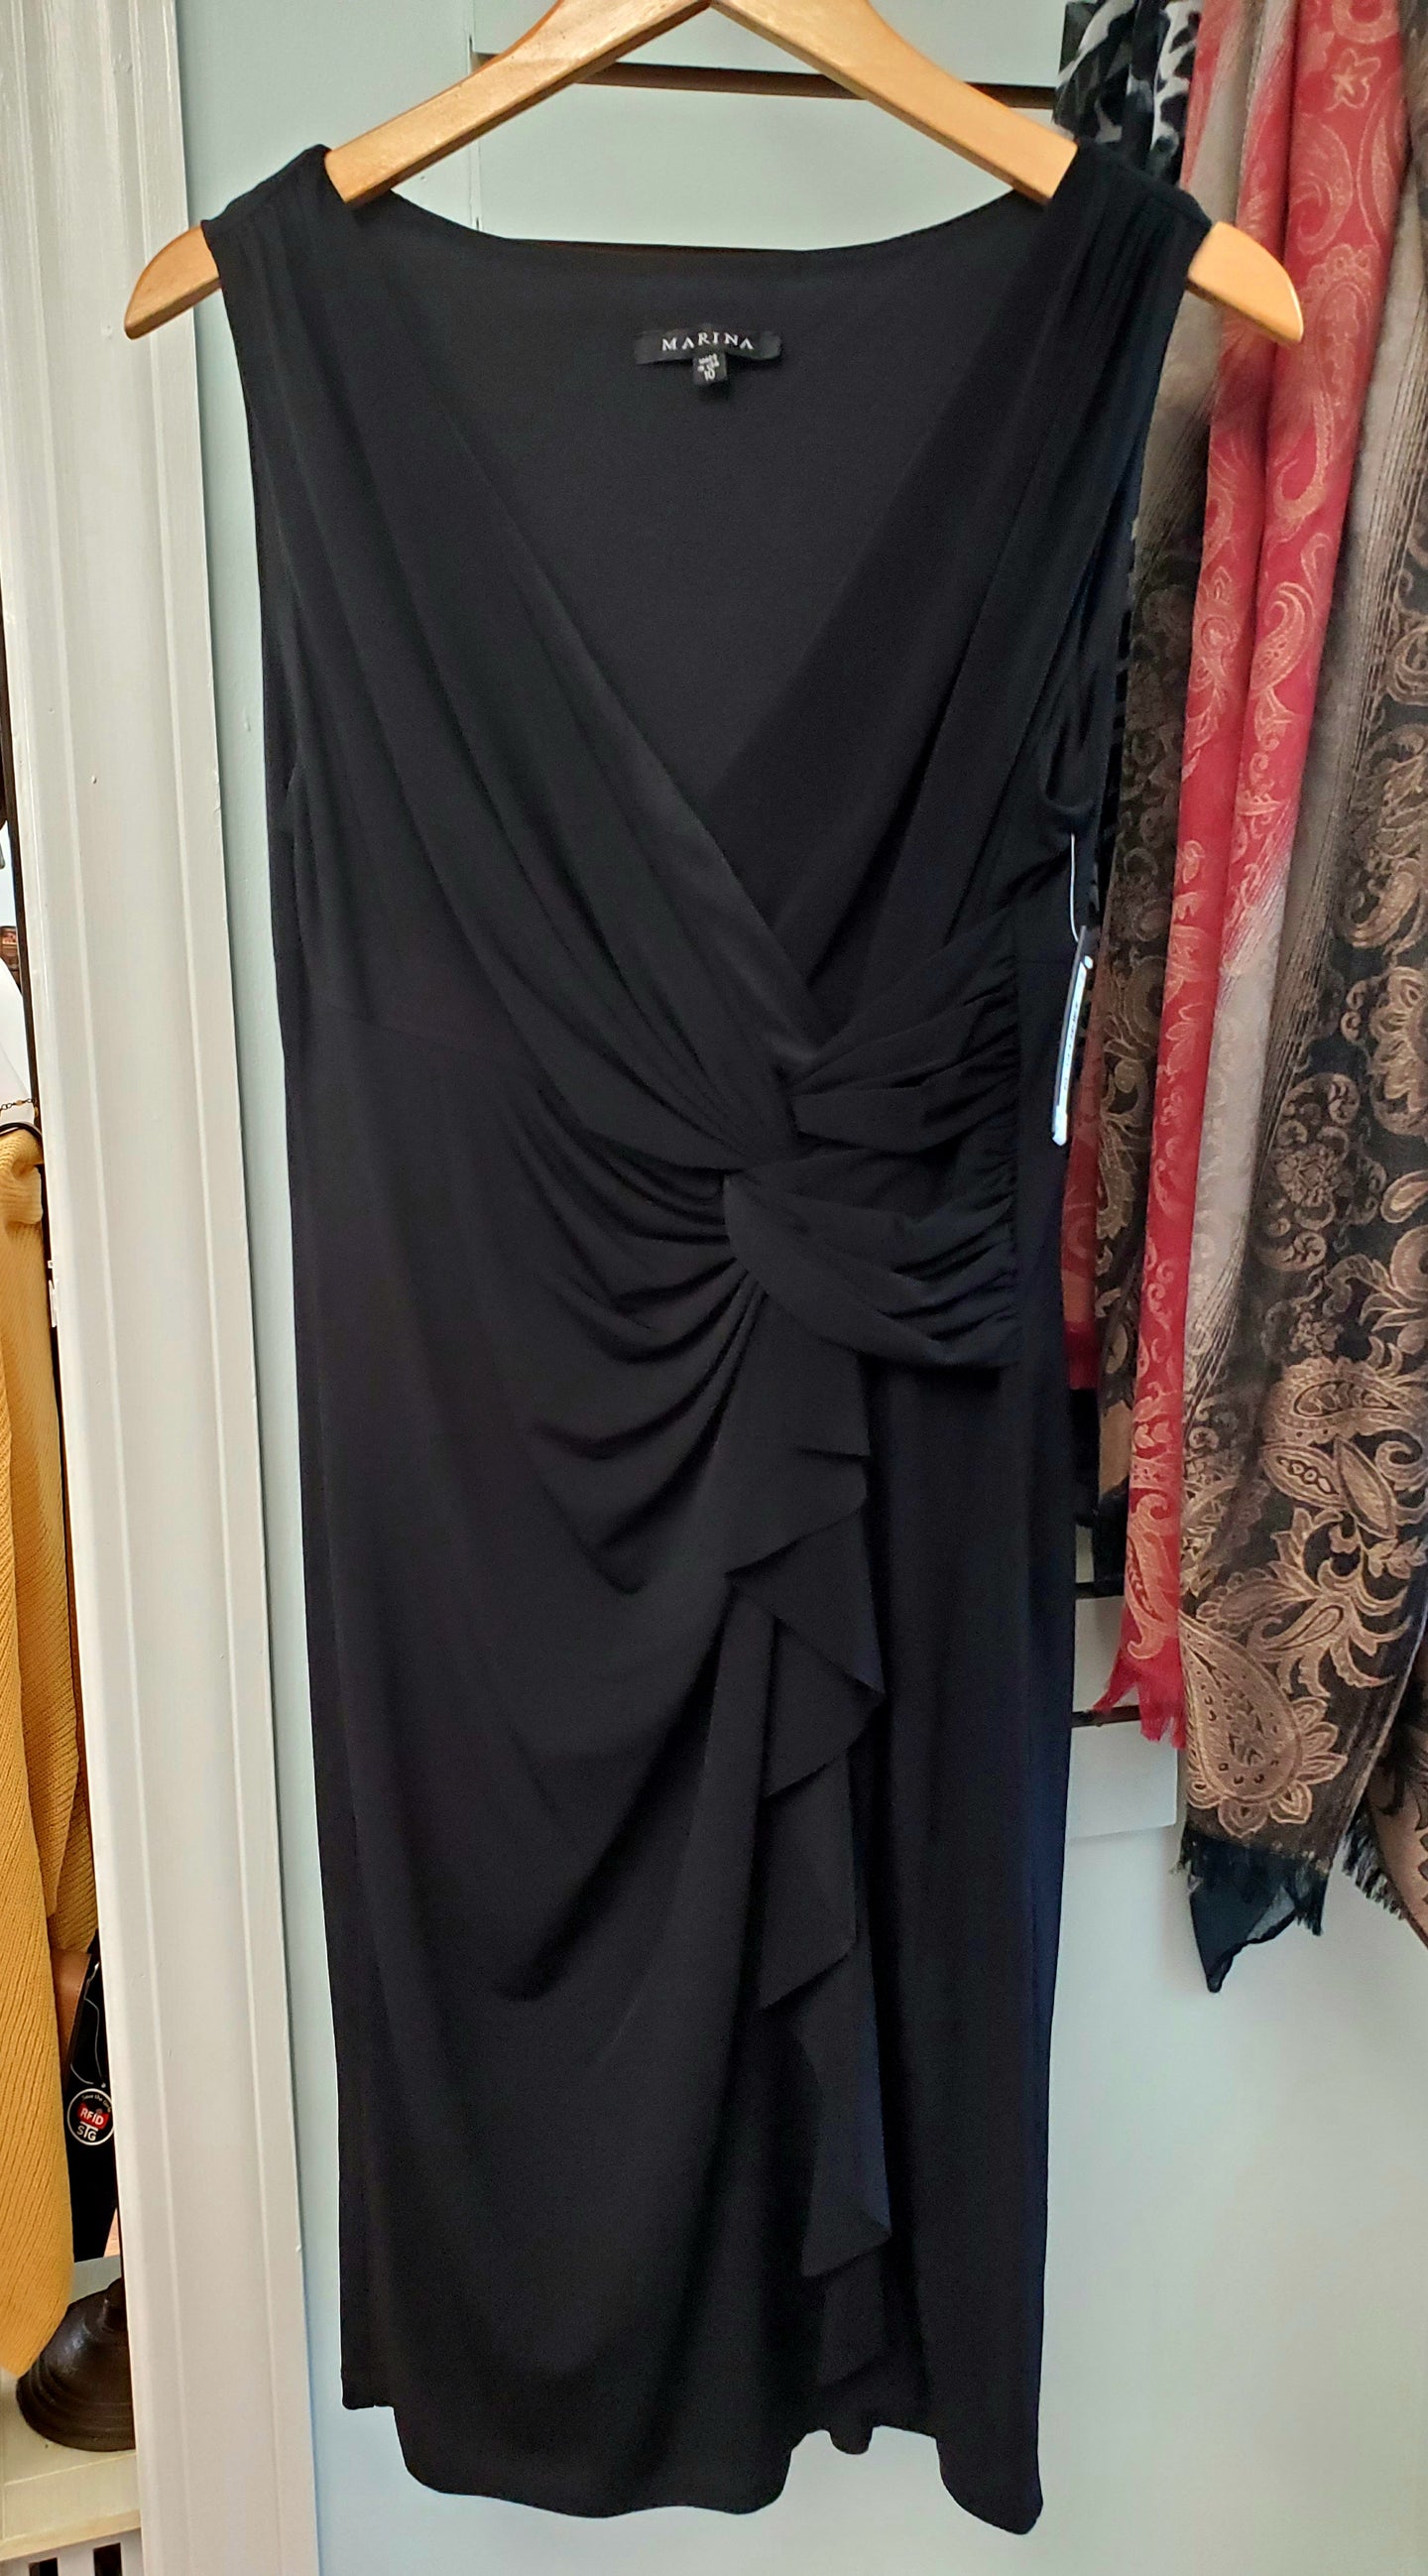 Black Mock Wrap Dress - Size 10 only